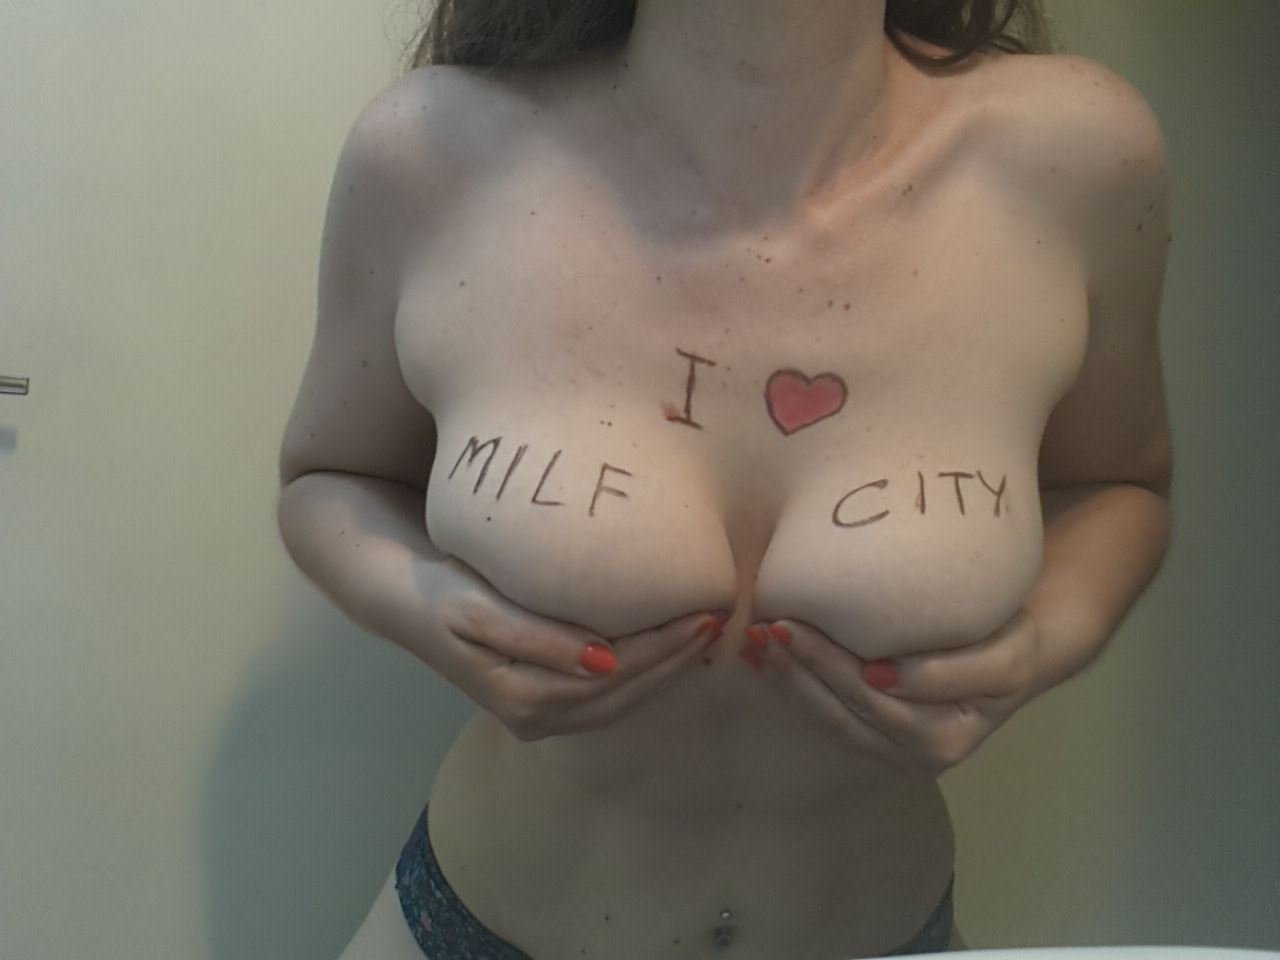 Icstor] Milf City V0.5 (3 of 3) - 74 - Hentai Image